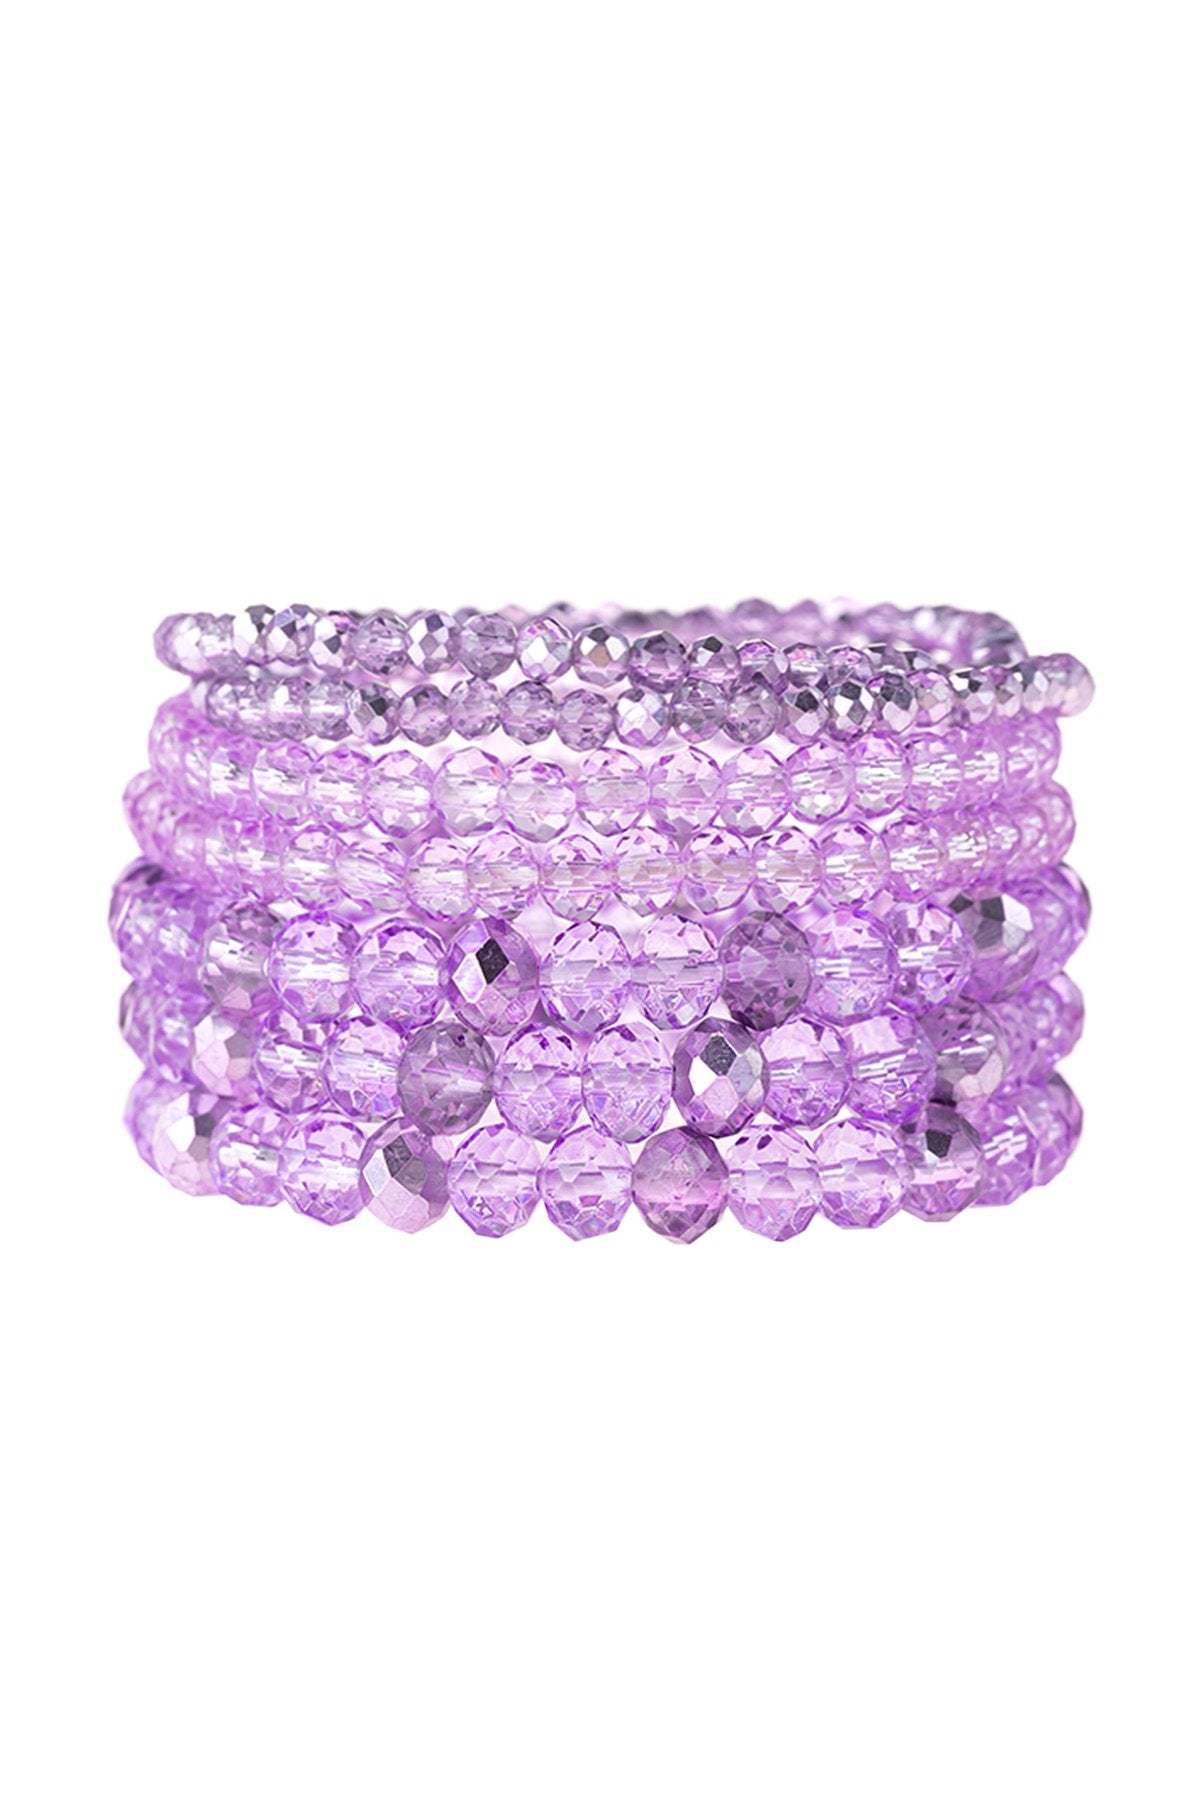 Hdb2750 - Seven Lines Glass Beads Stretch Bracelet